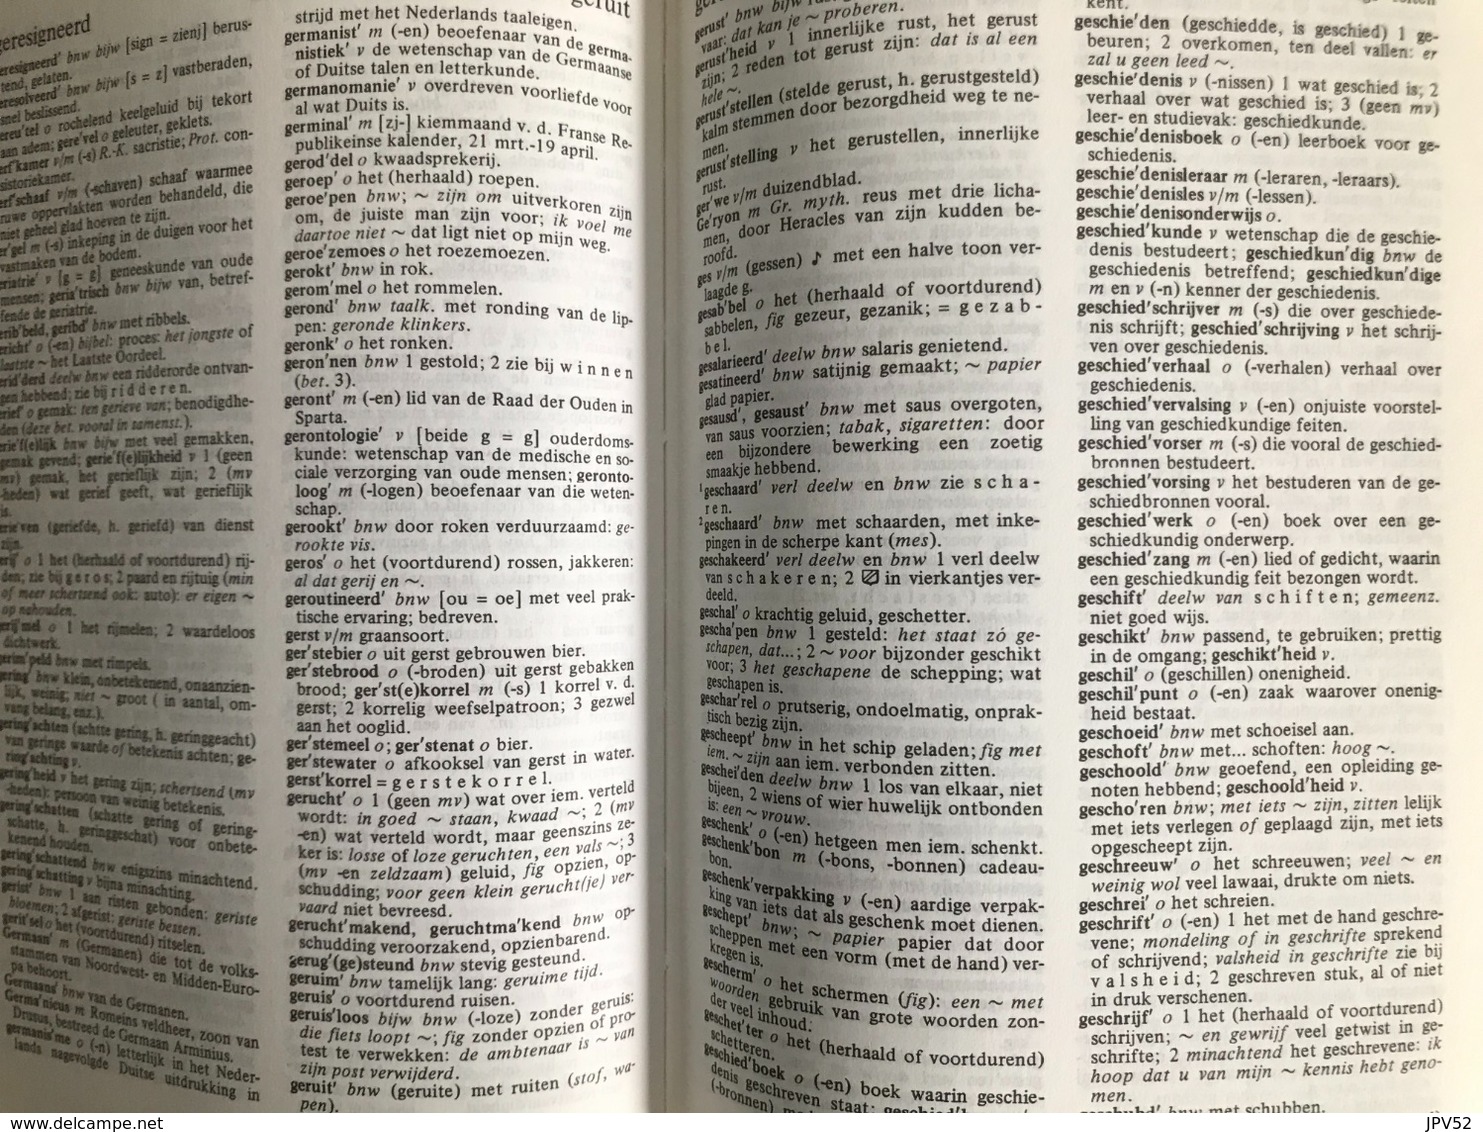 (322) Kramers Woordenboek Nederlands -1192p. - Dictionaries